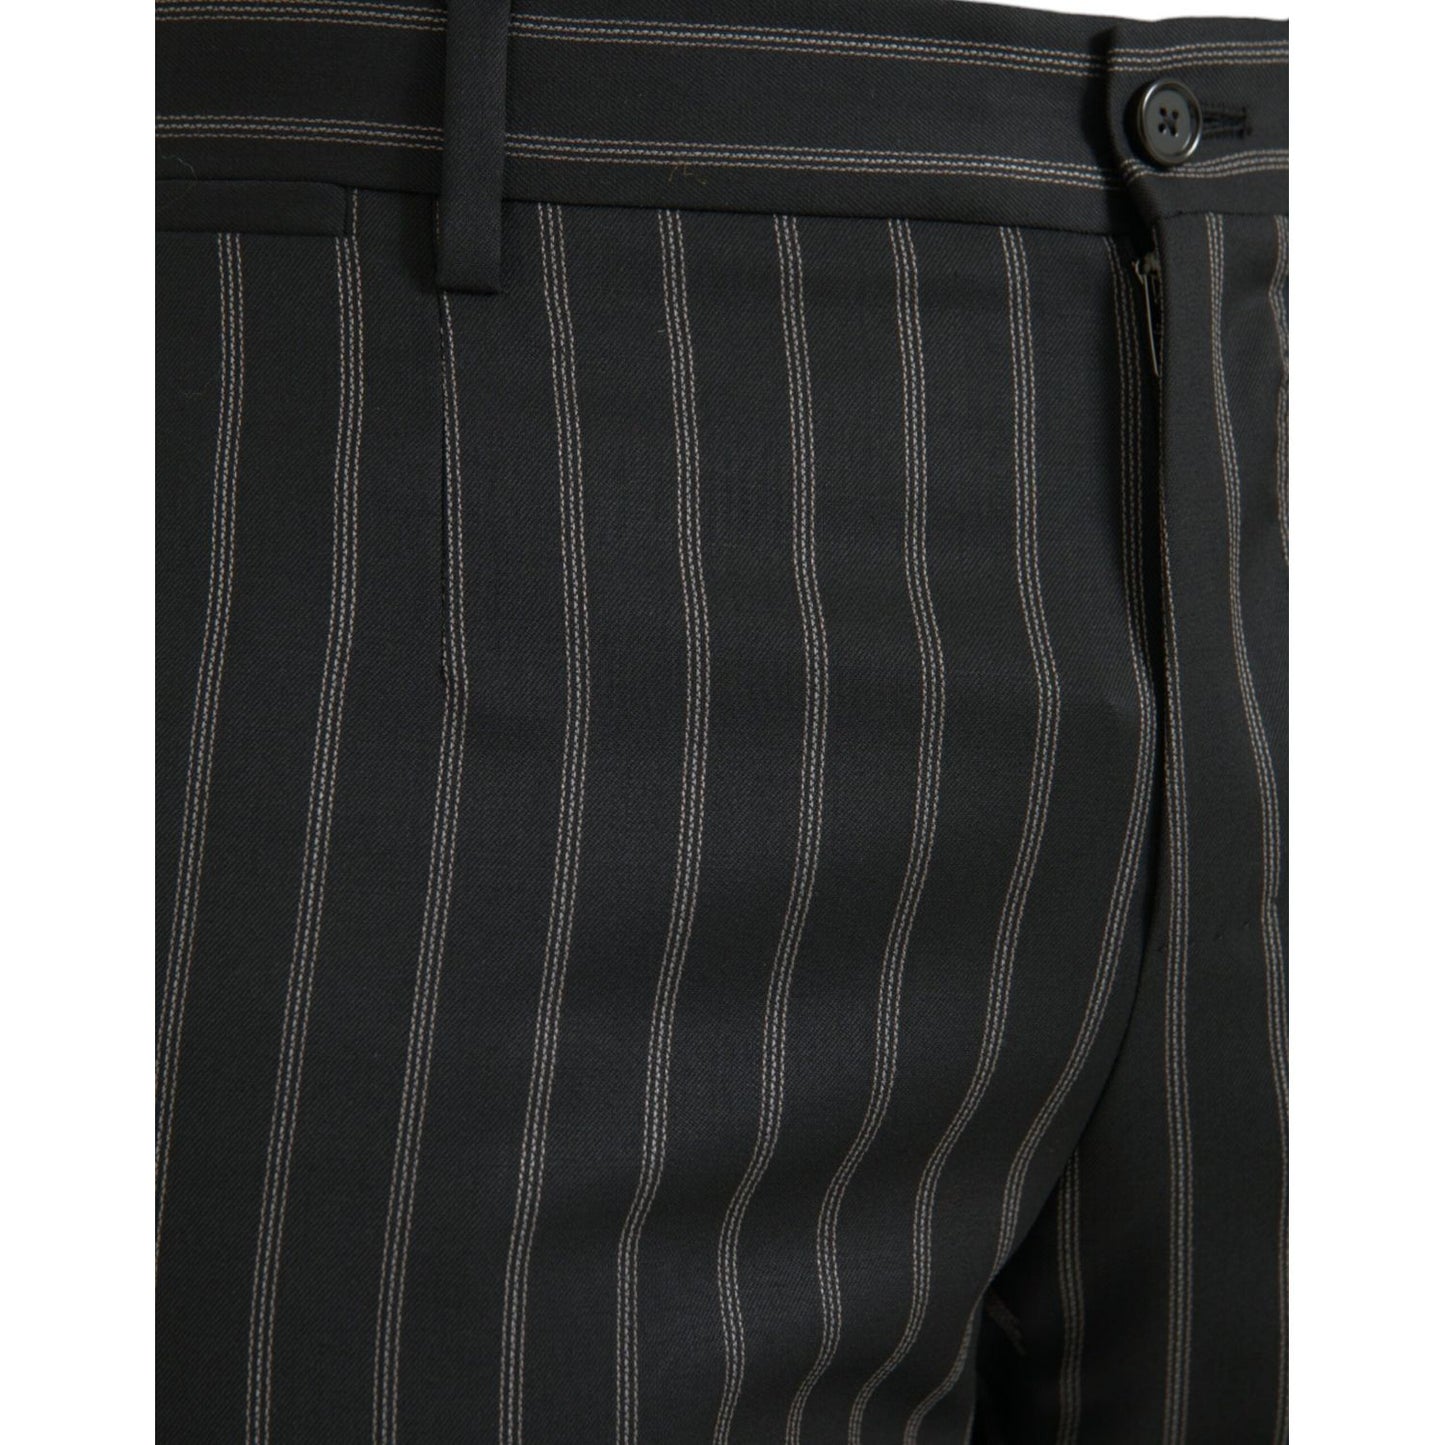 Dolce & Gabbana Black Striped Wool Skinny Dress Pants black-striped-wool-skinny-dress-pants